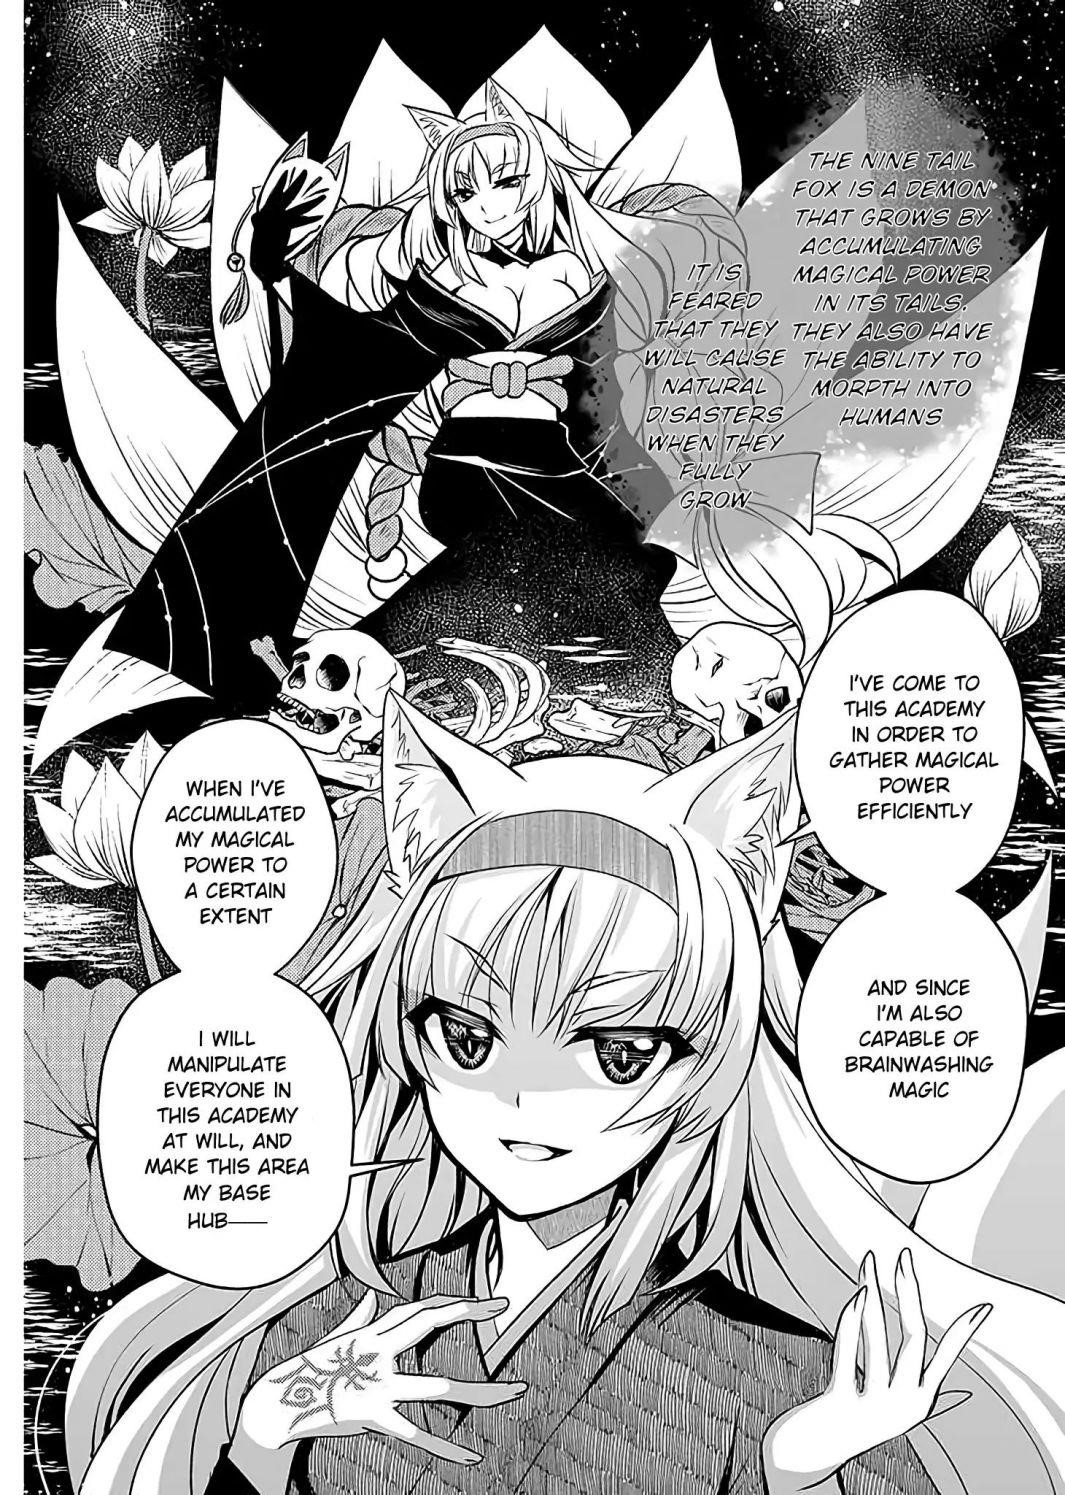 Read Manga Level 1 no Saikyou kenja ~Noroi de sai kakyuu mahou shika ...